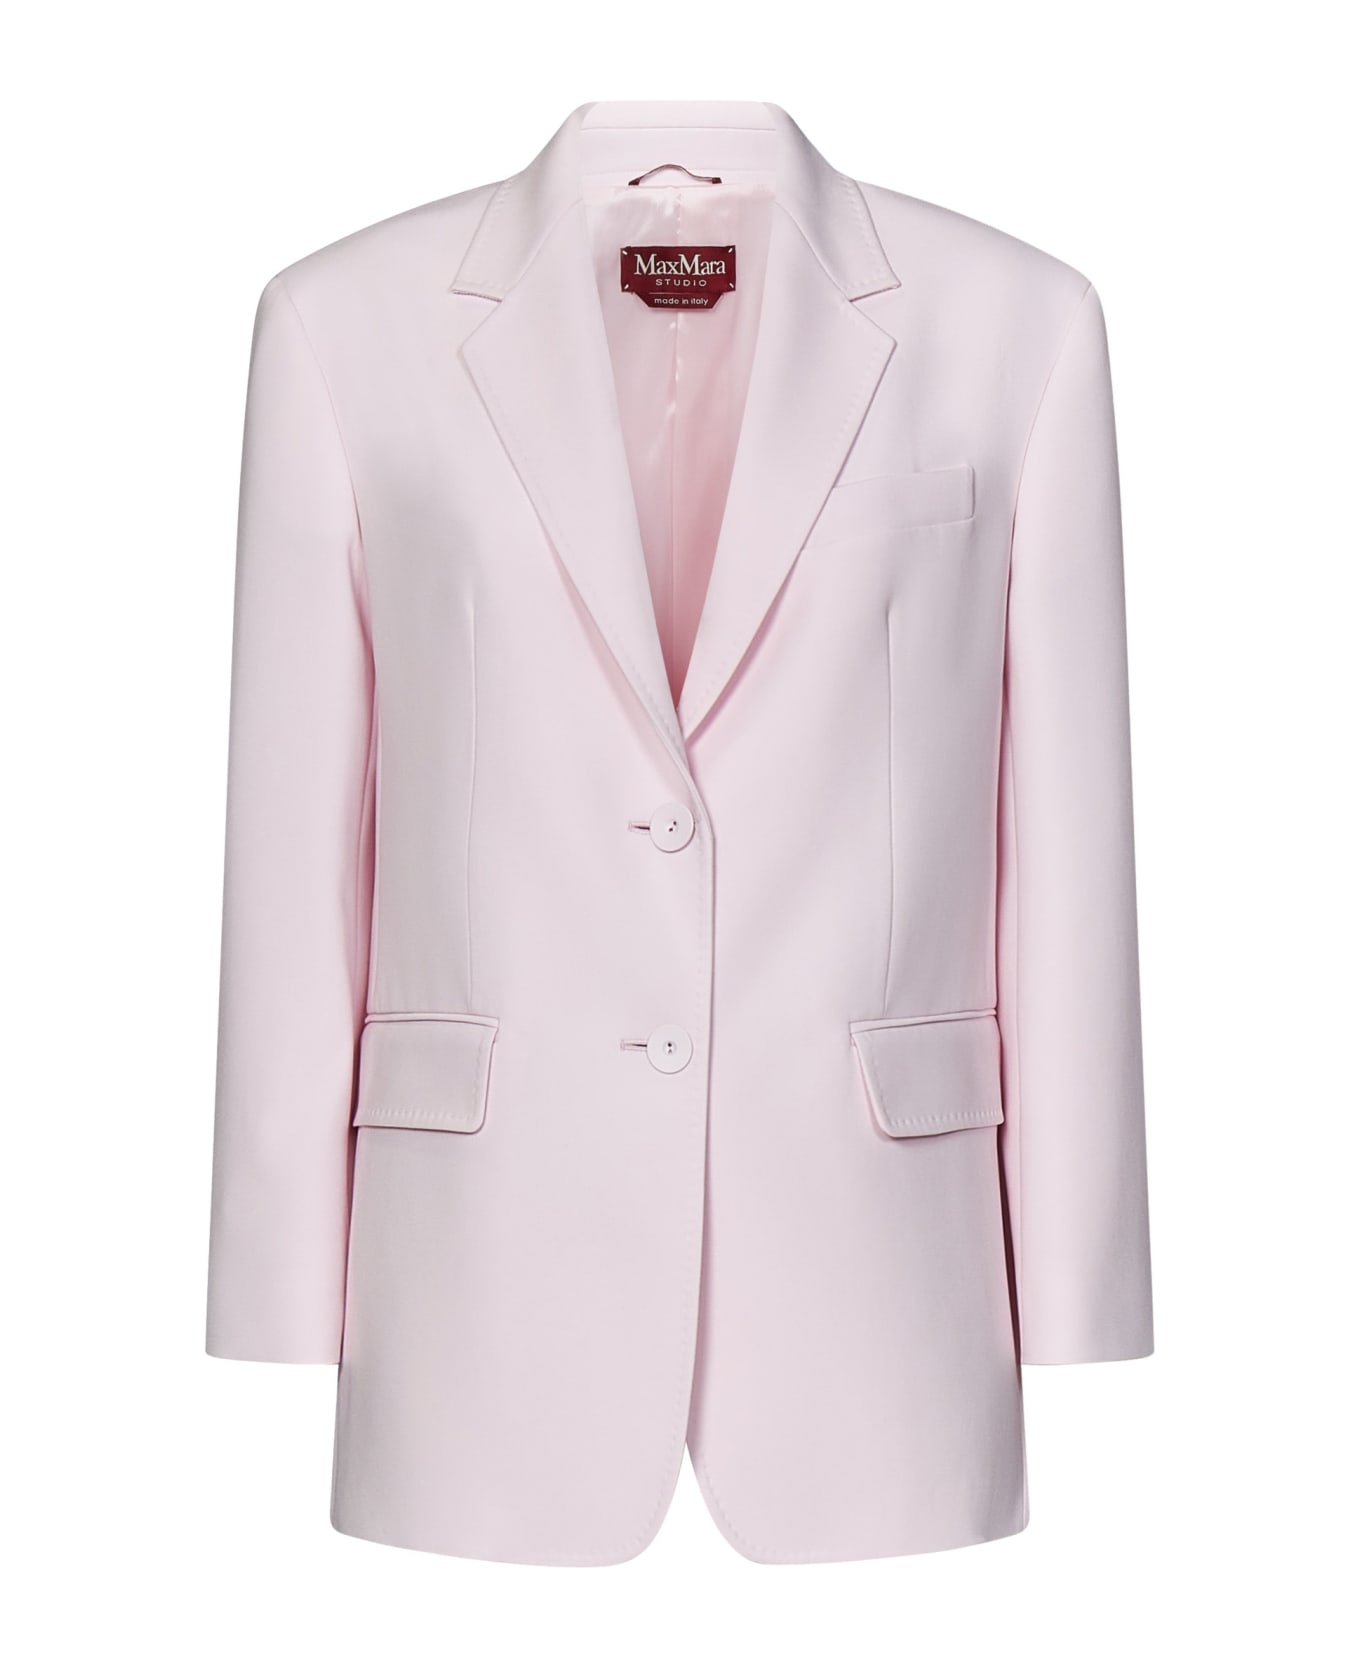 Max Mara Studio Suit - Pink ブレザー